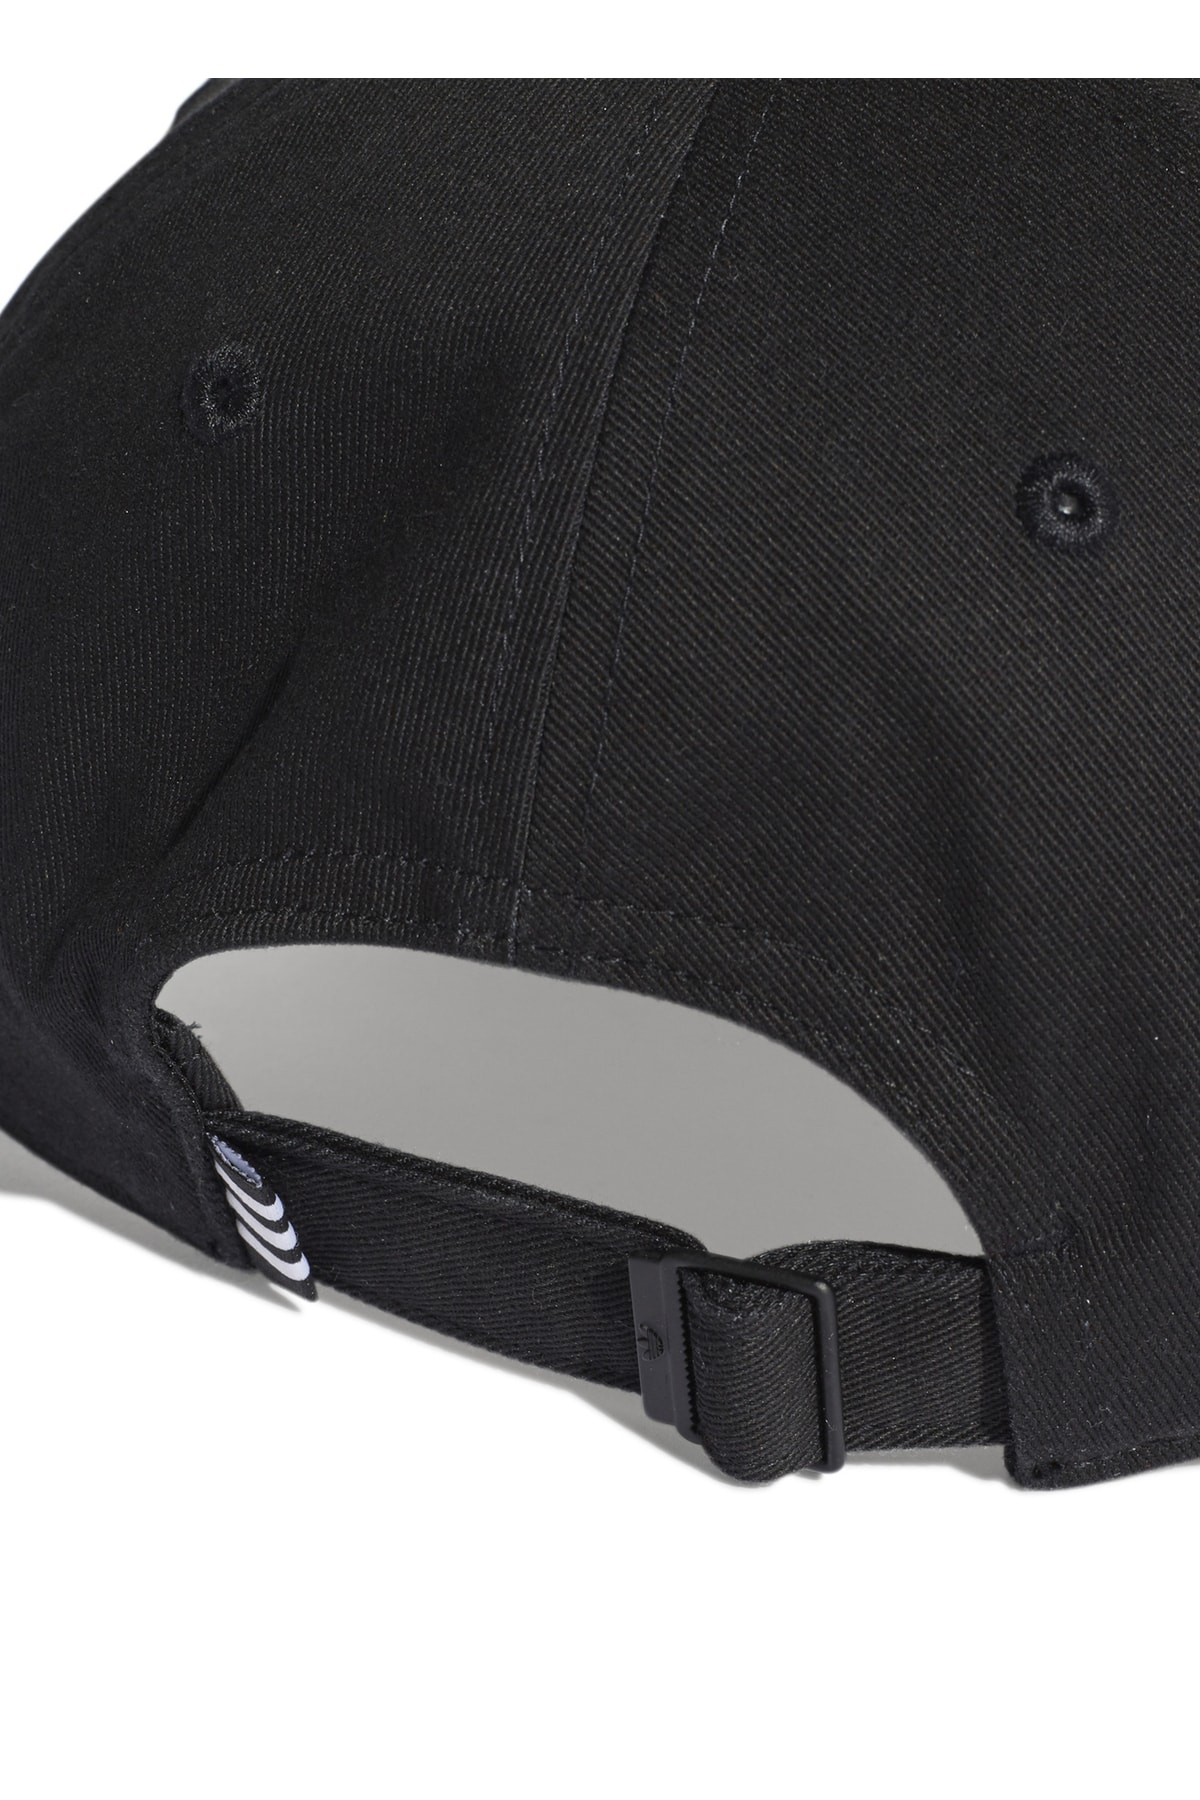 adidas کلاه سیاه - سفید یونیسکس Ec3603 Baseb Class Tre